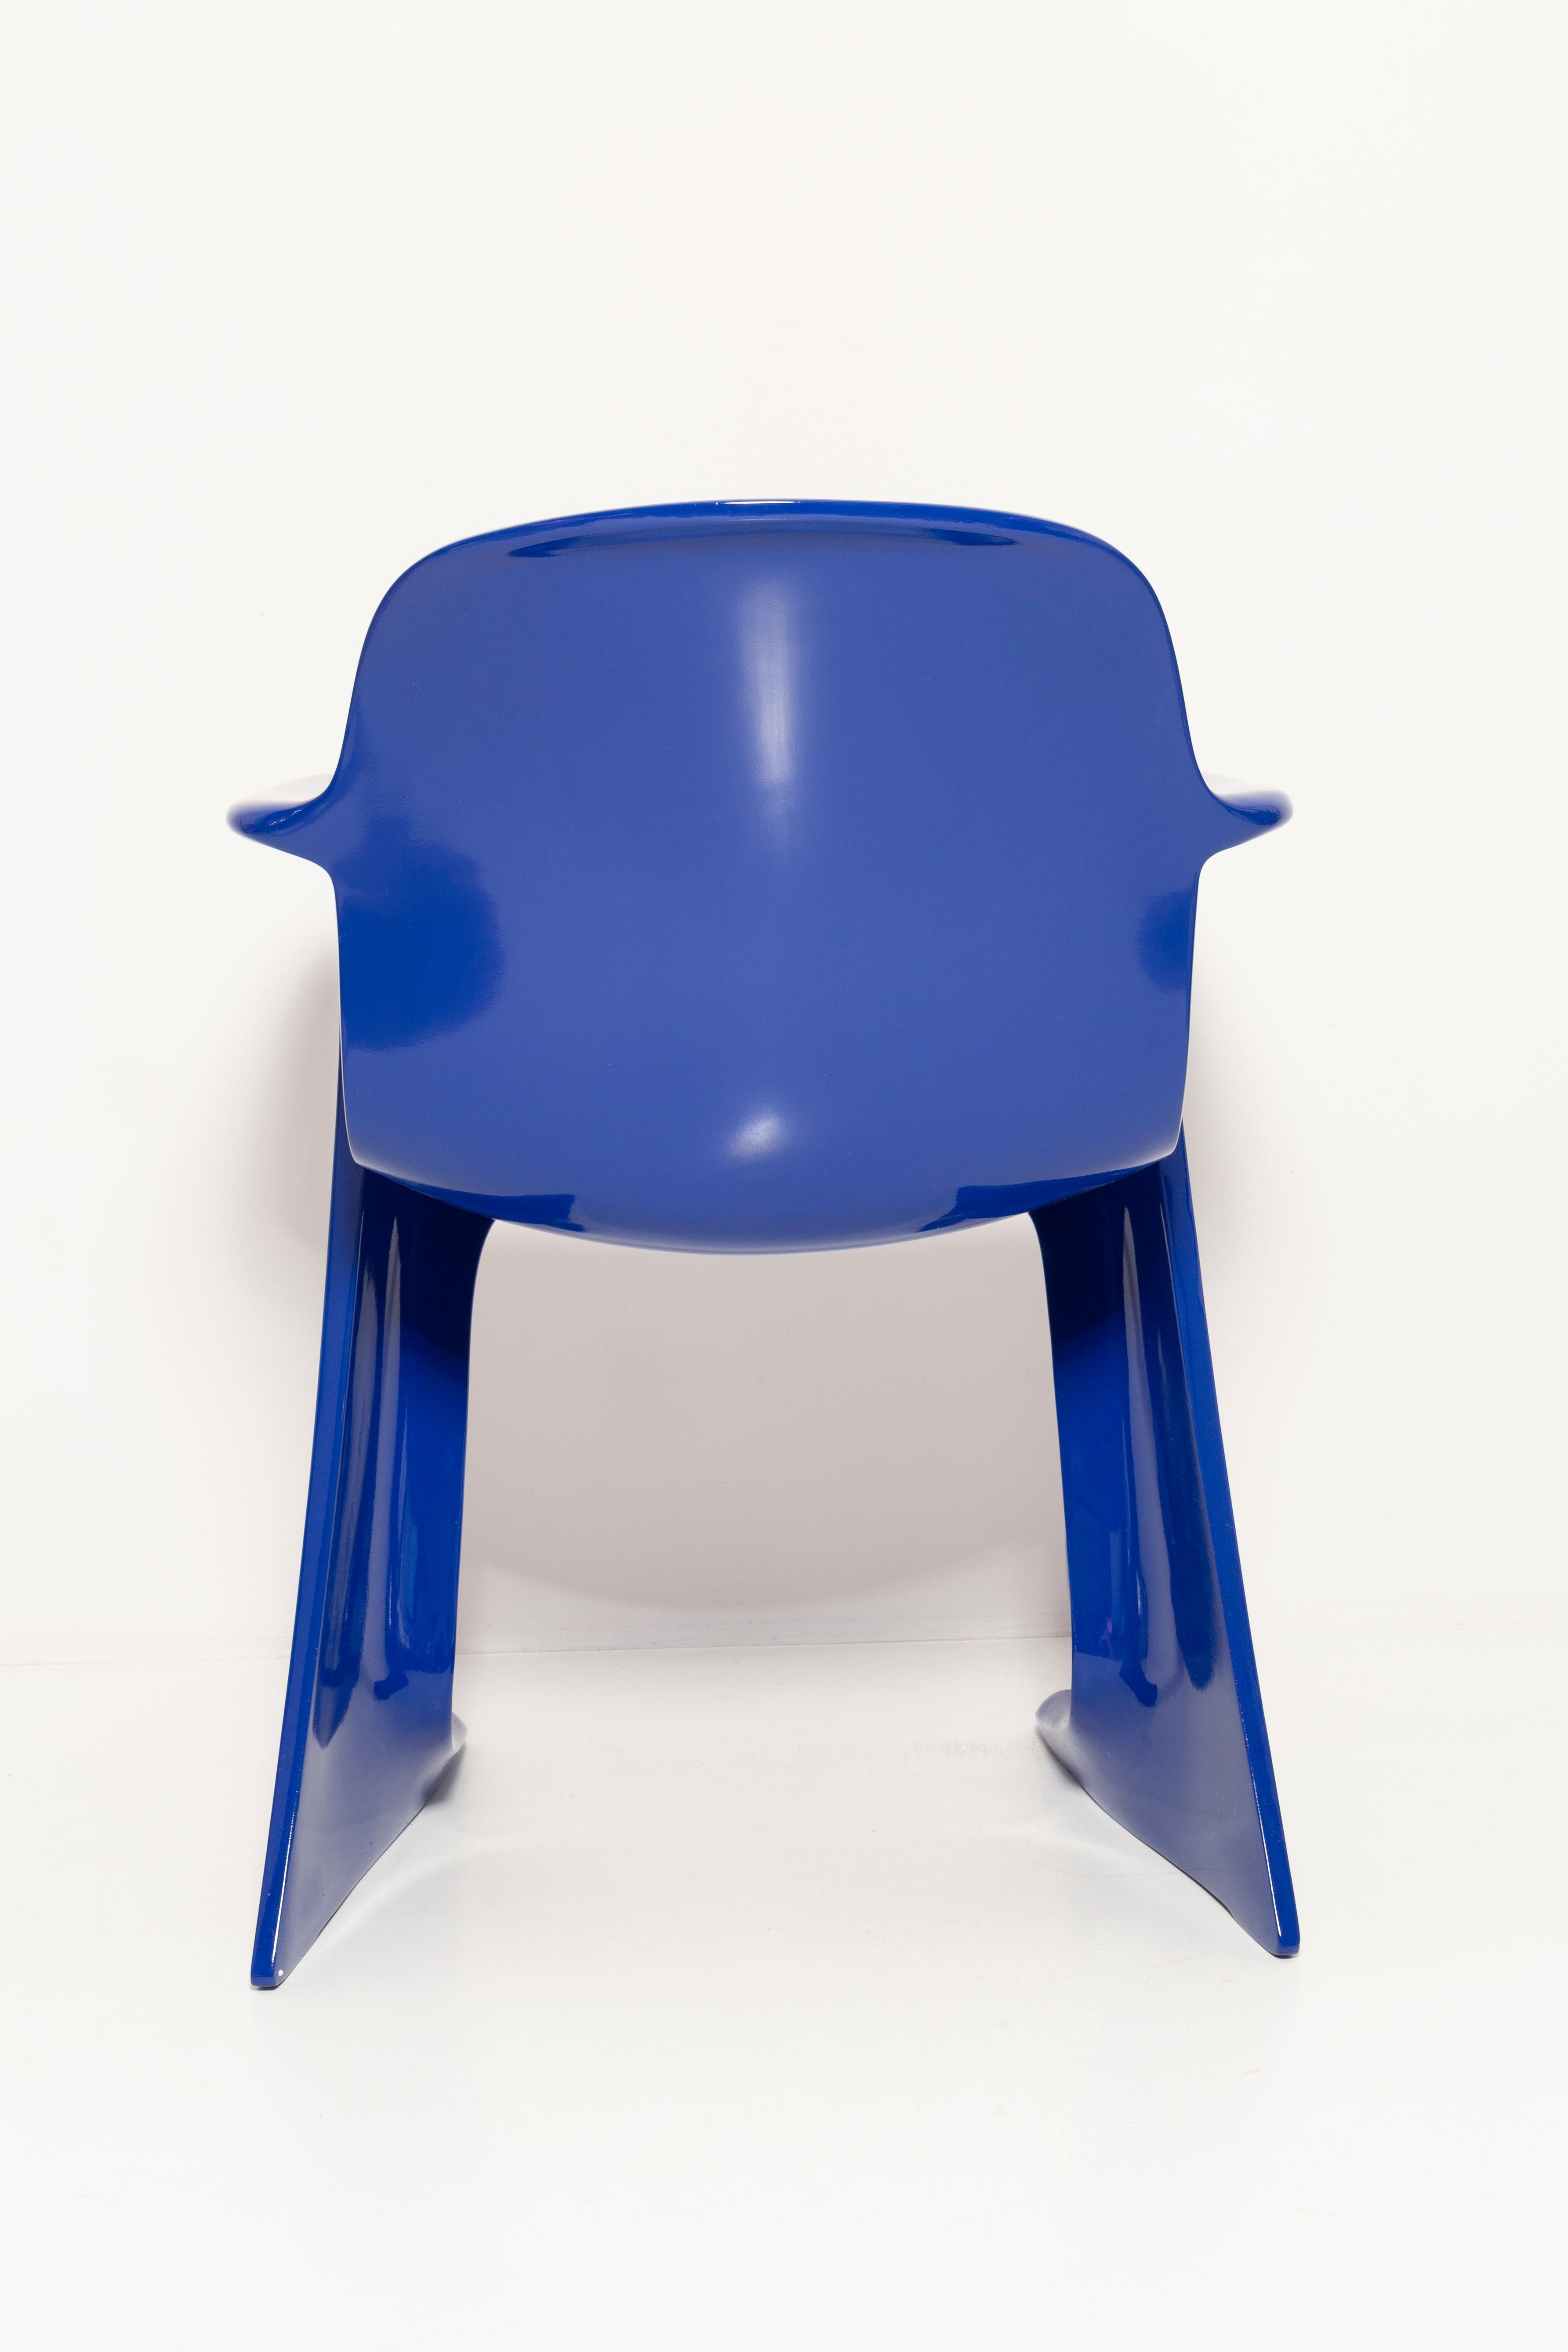 Ultramarine Blue Kangaroo Chair Designed by Ernst Moeckl, Germany, 1968 For Sale 1